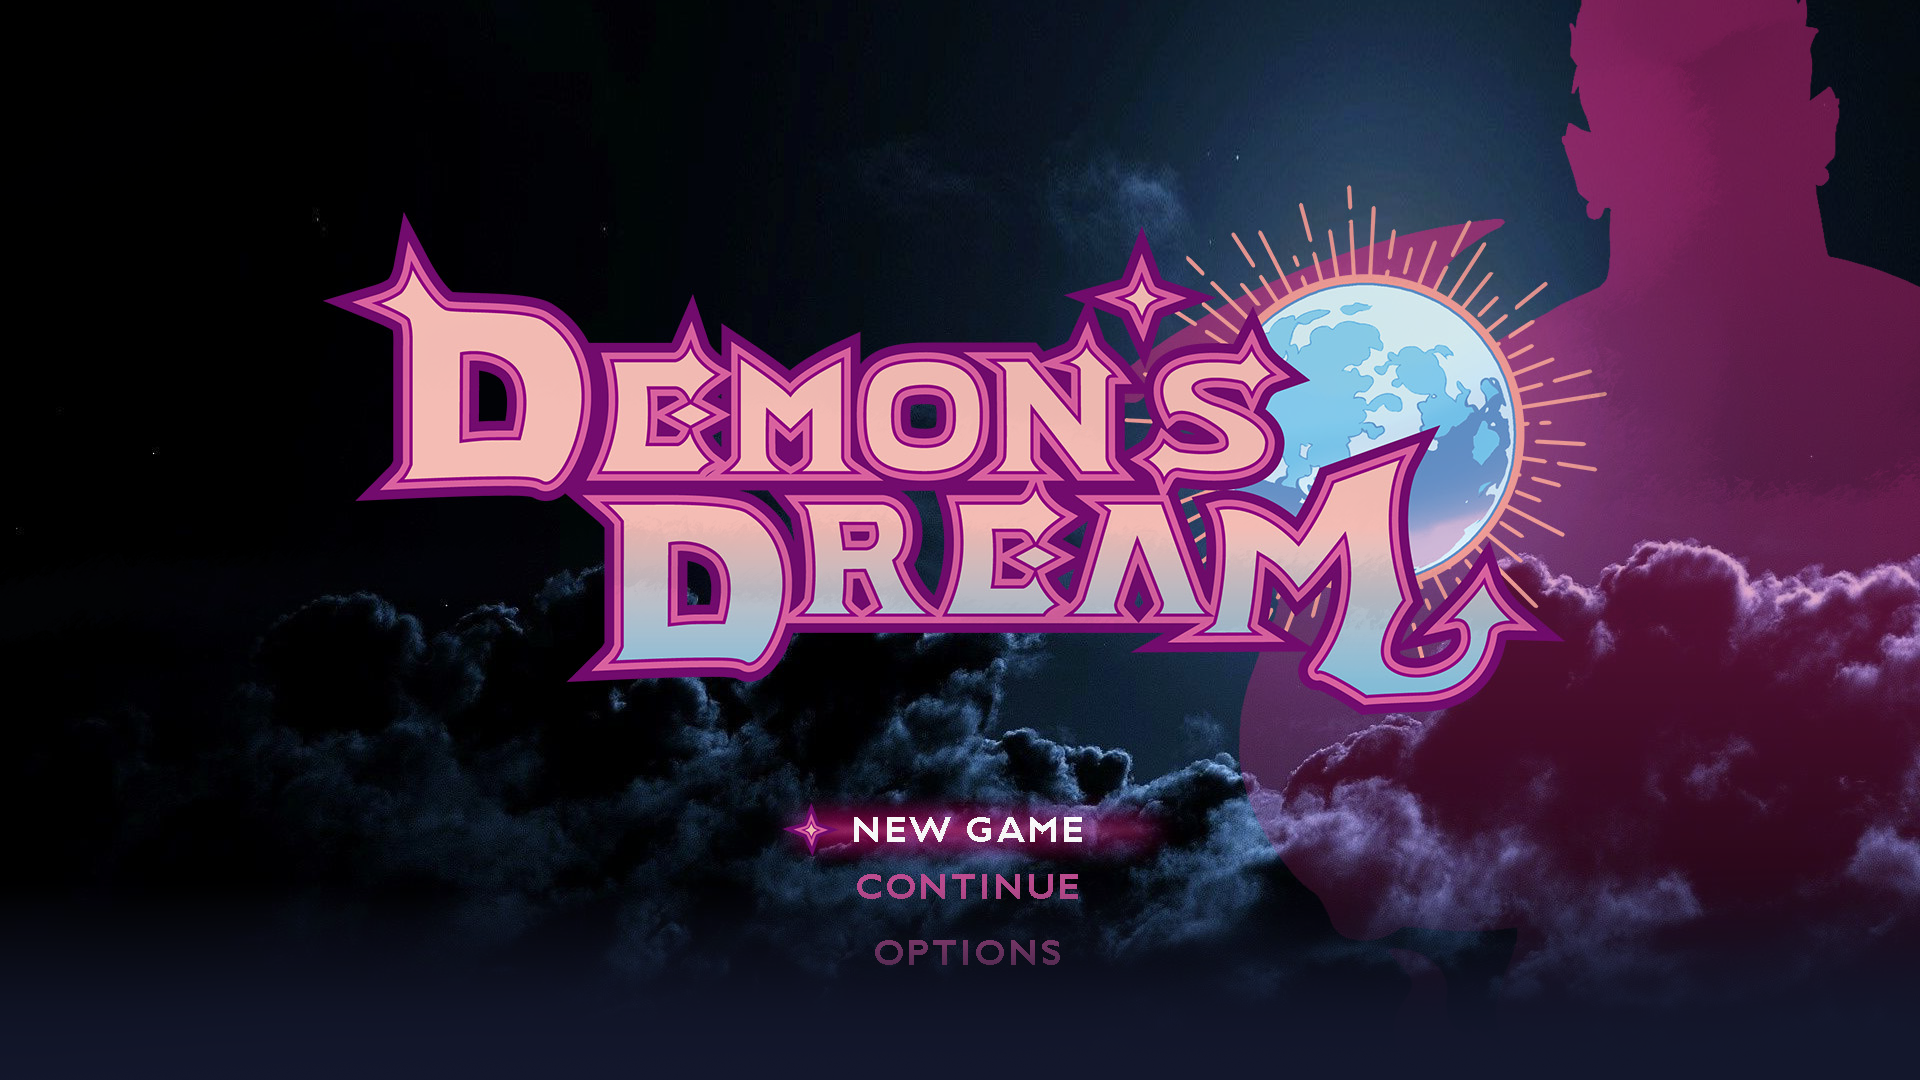 Management Remake + Demon's dream Demo Funding!